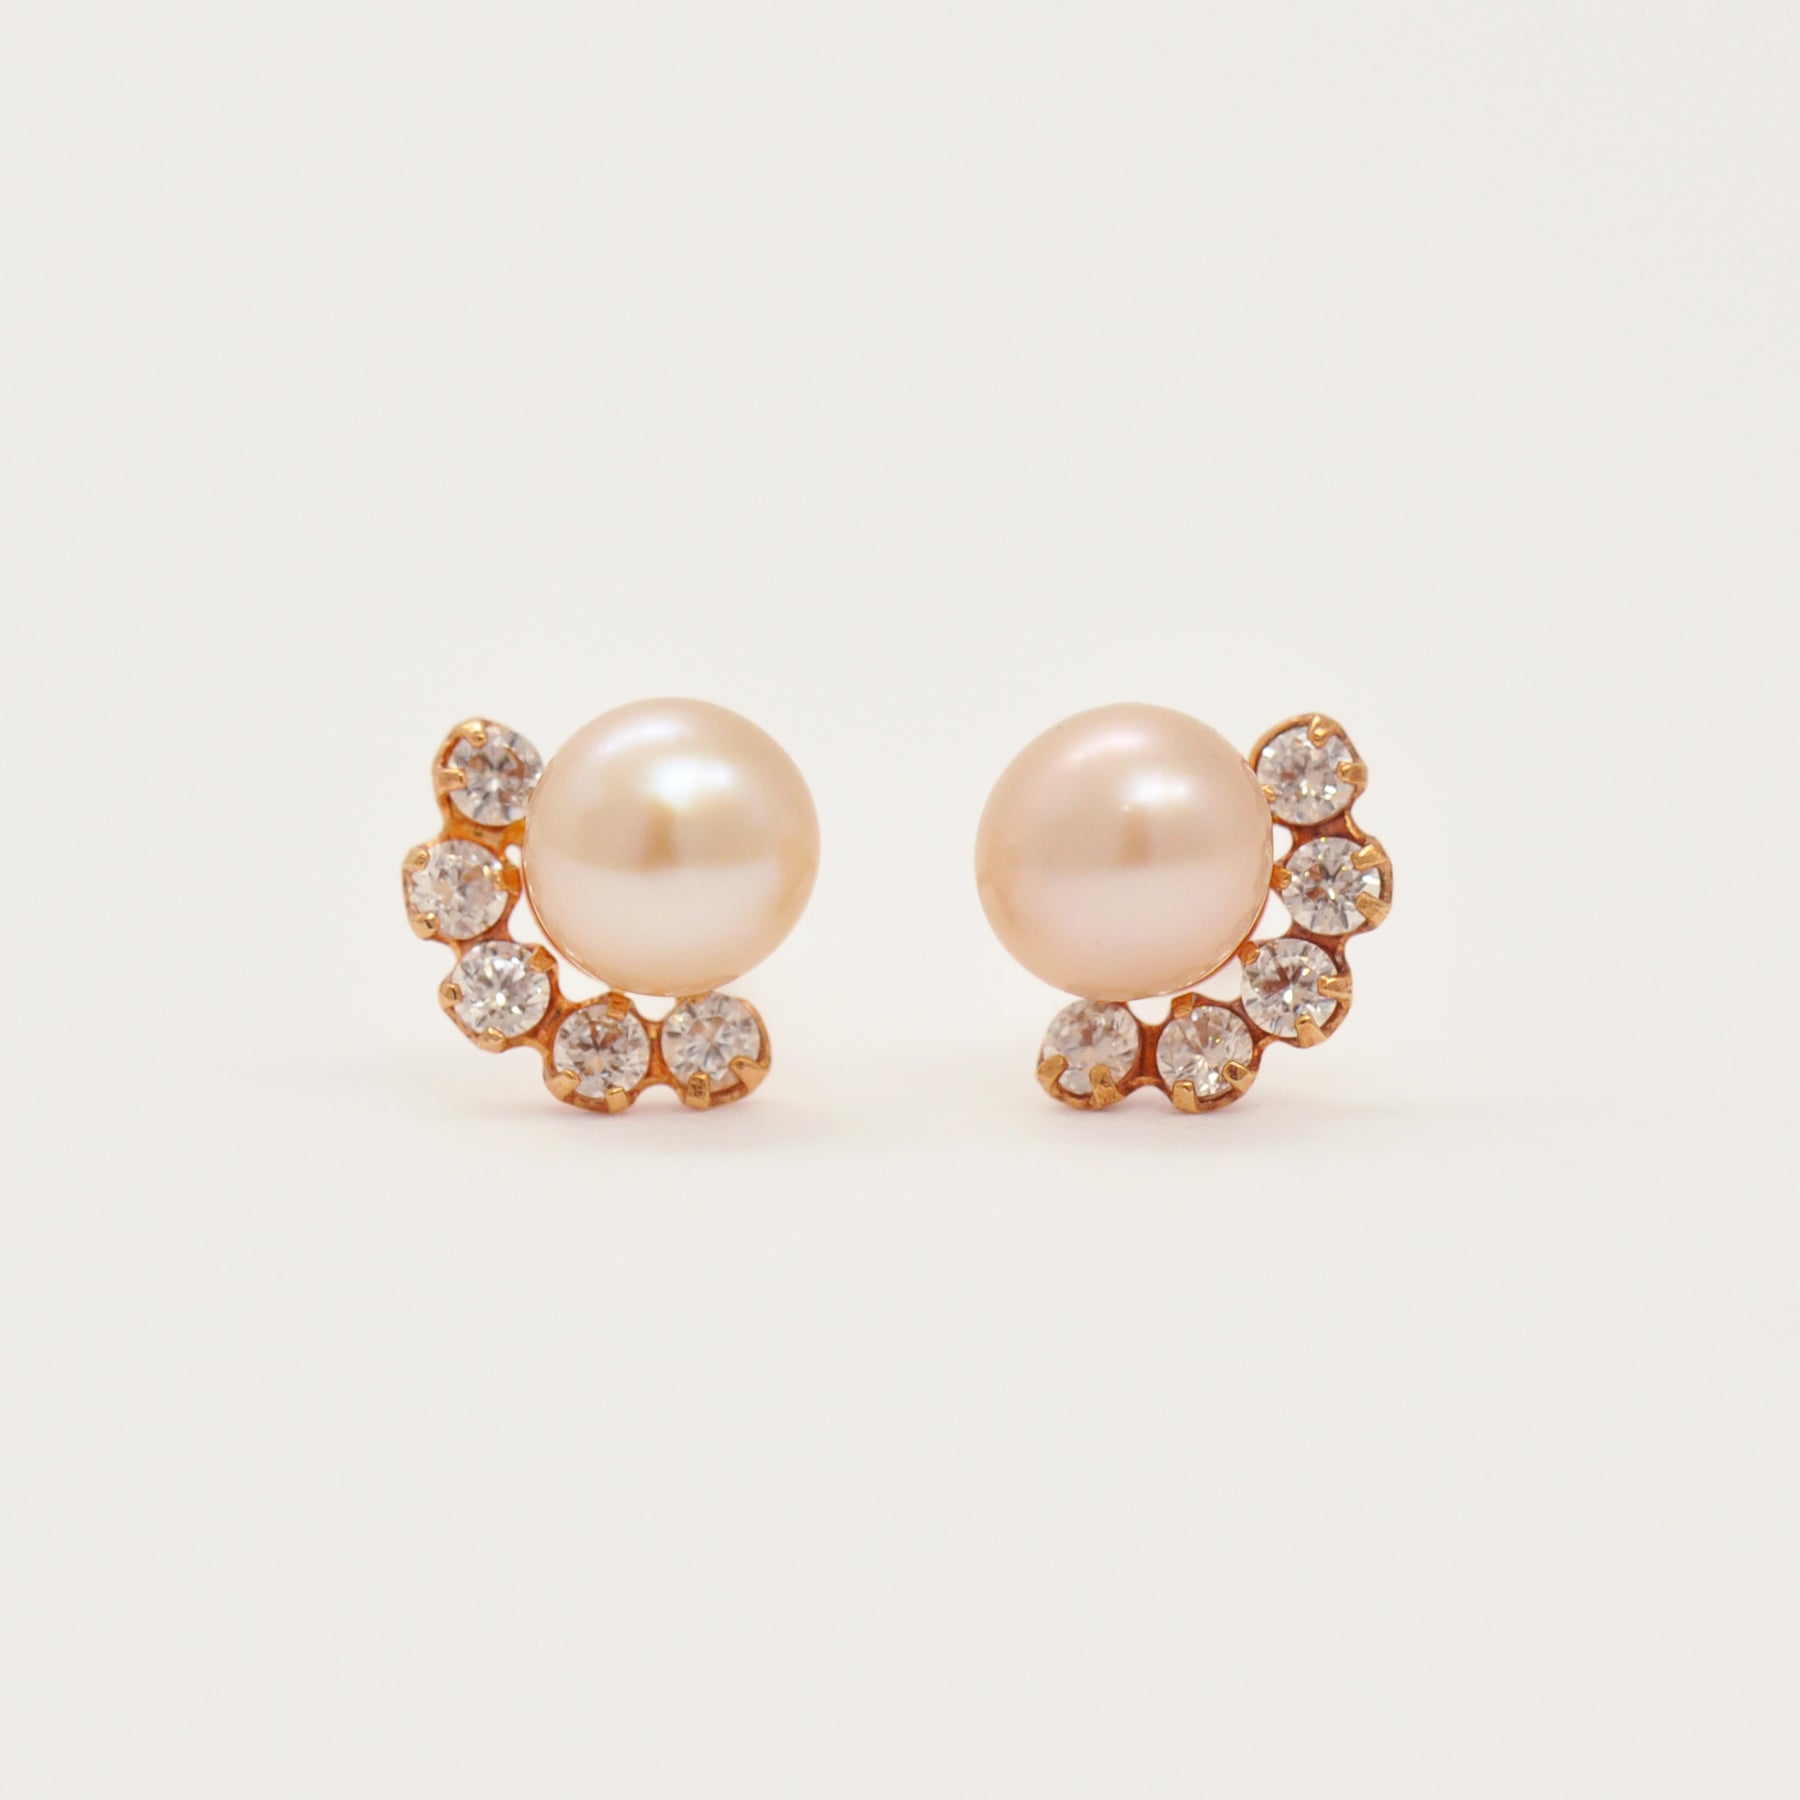 18K Rose Gold Glittering Freshwater Pearl Earrings - Product Image